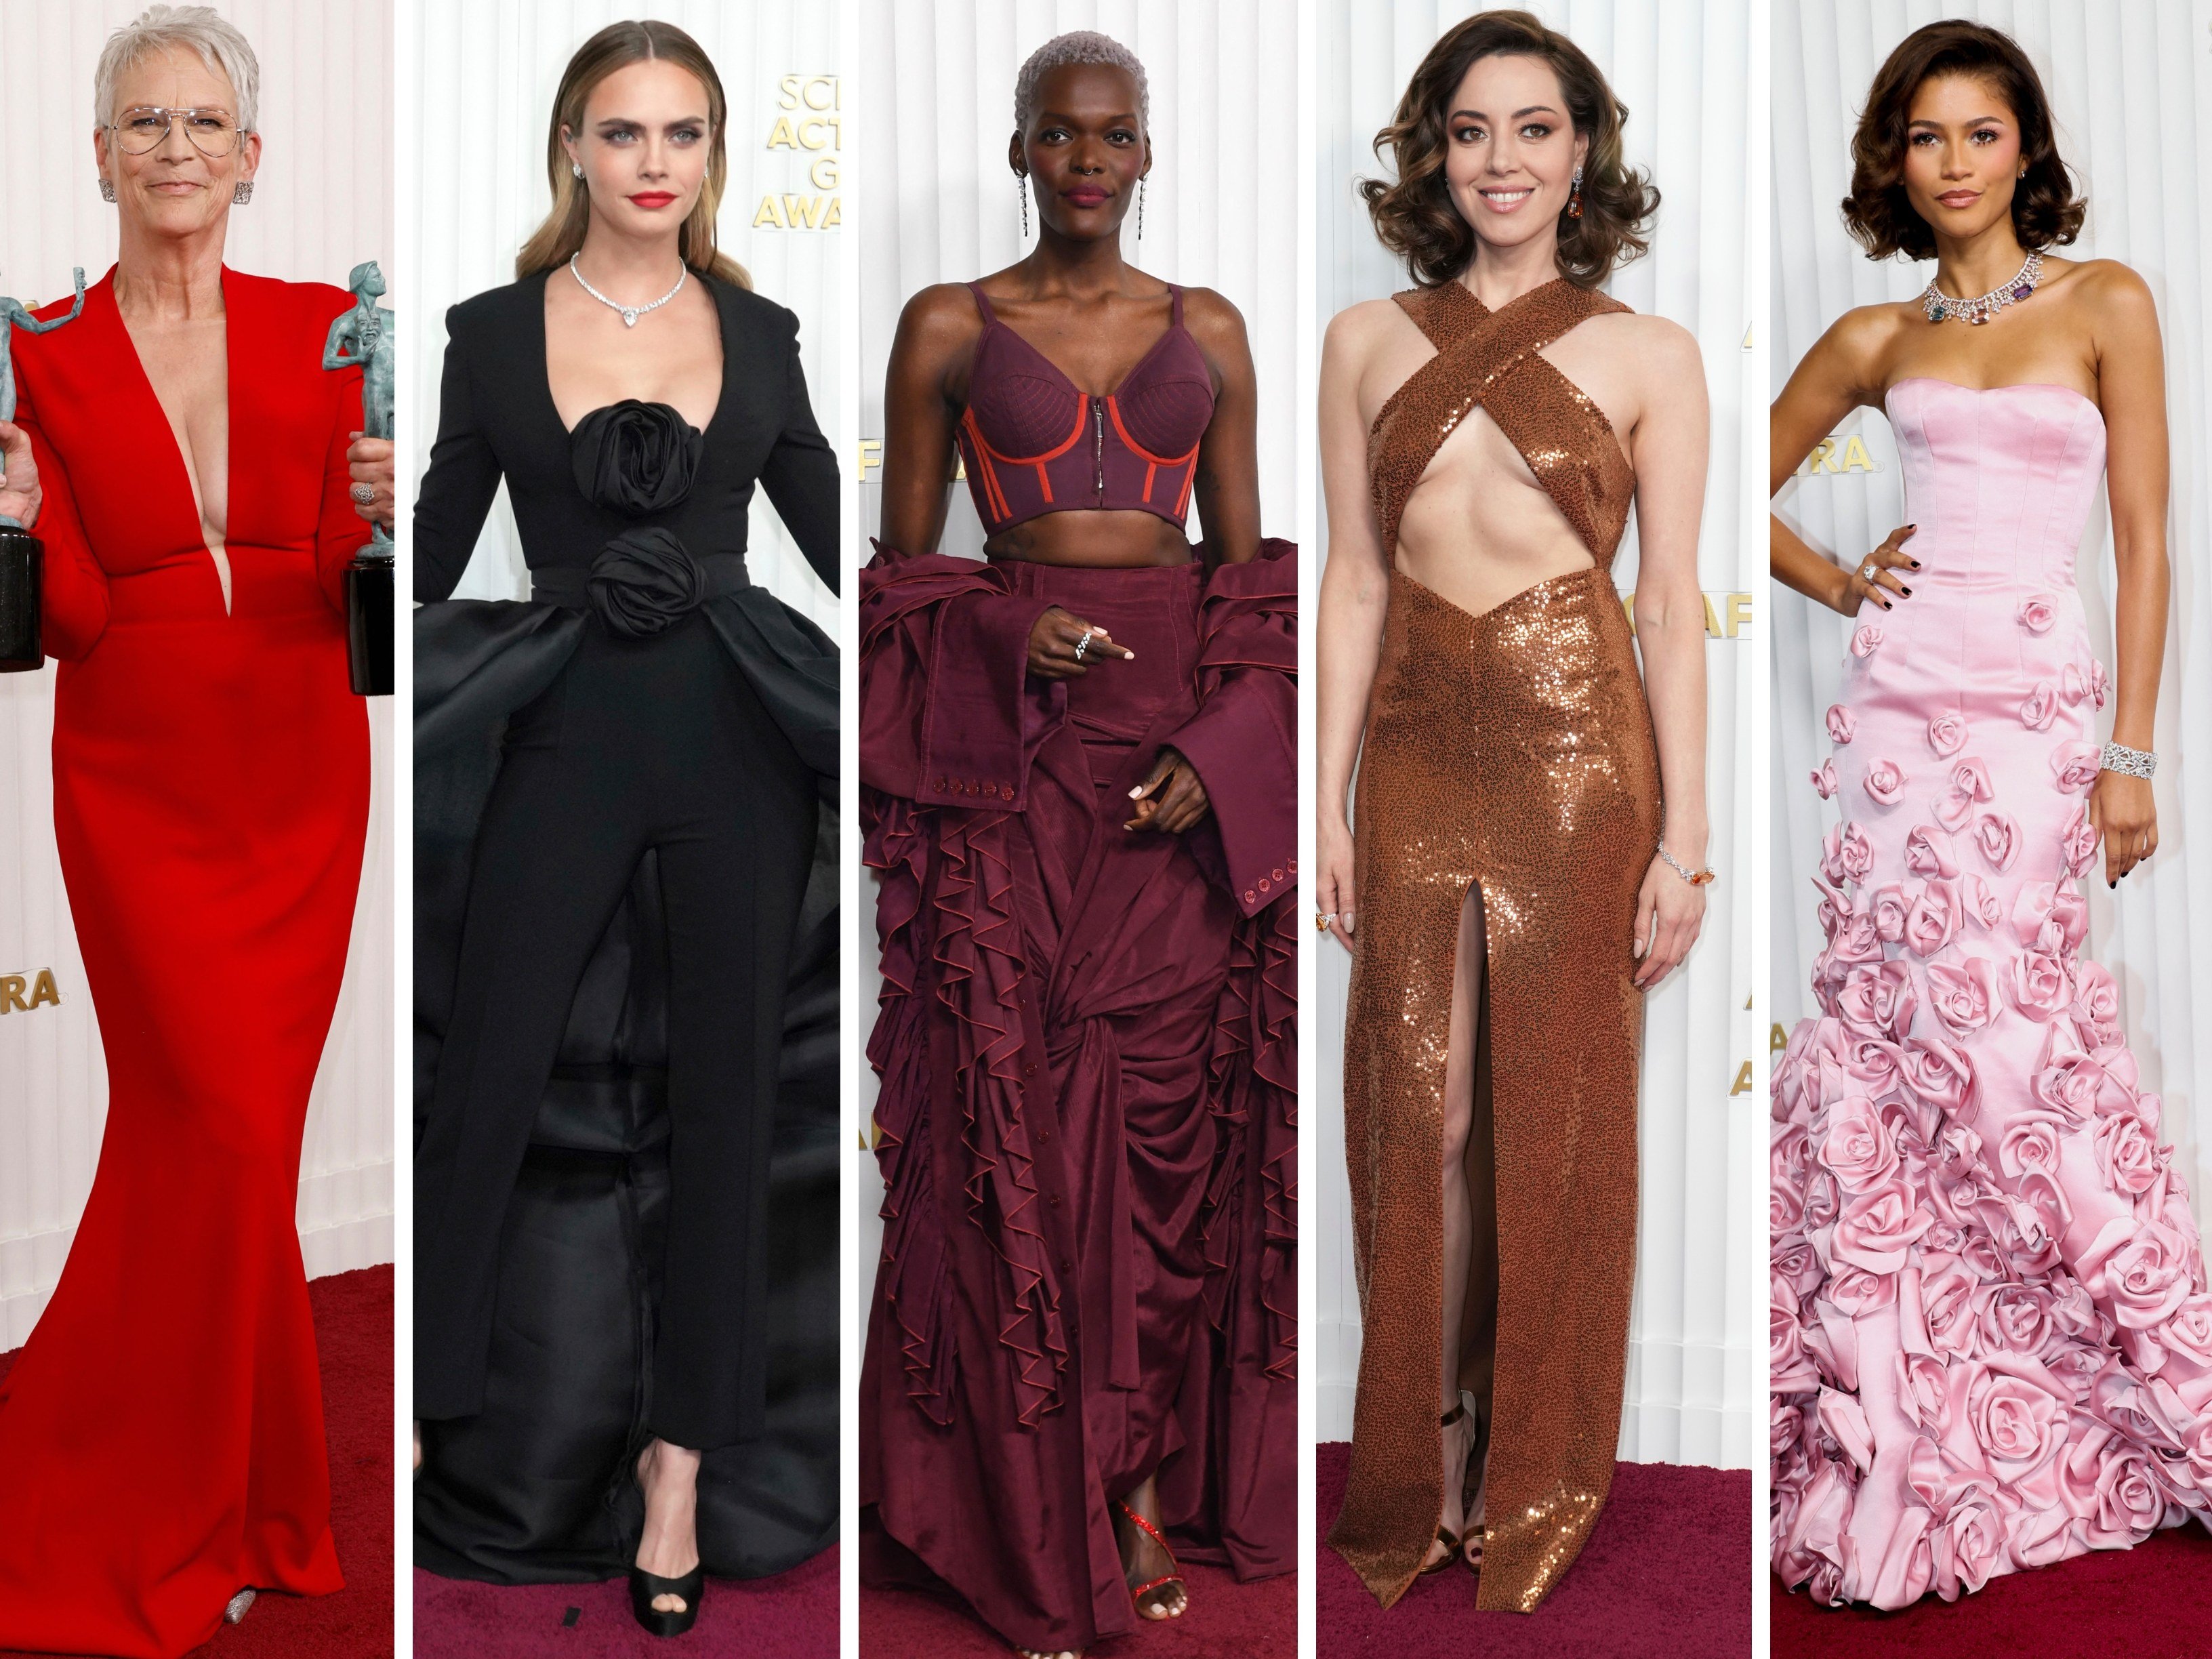 SAG Awards 2023 Red Carpet Photos: The Best Looks